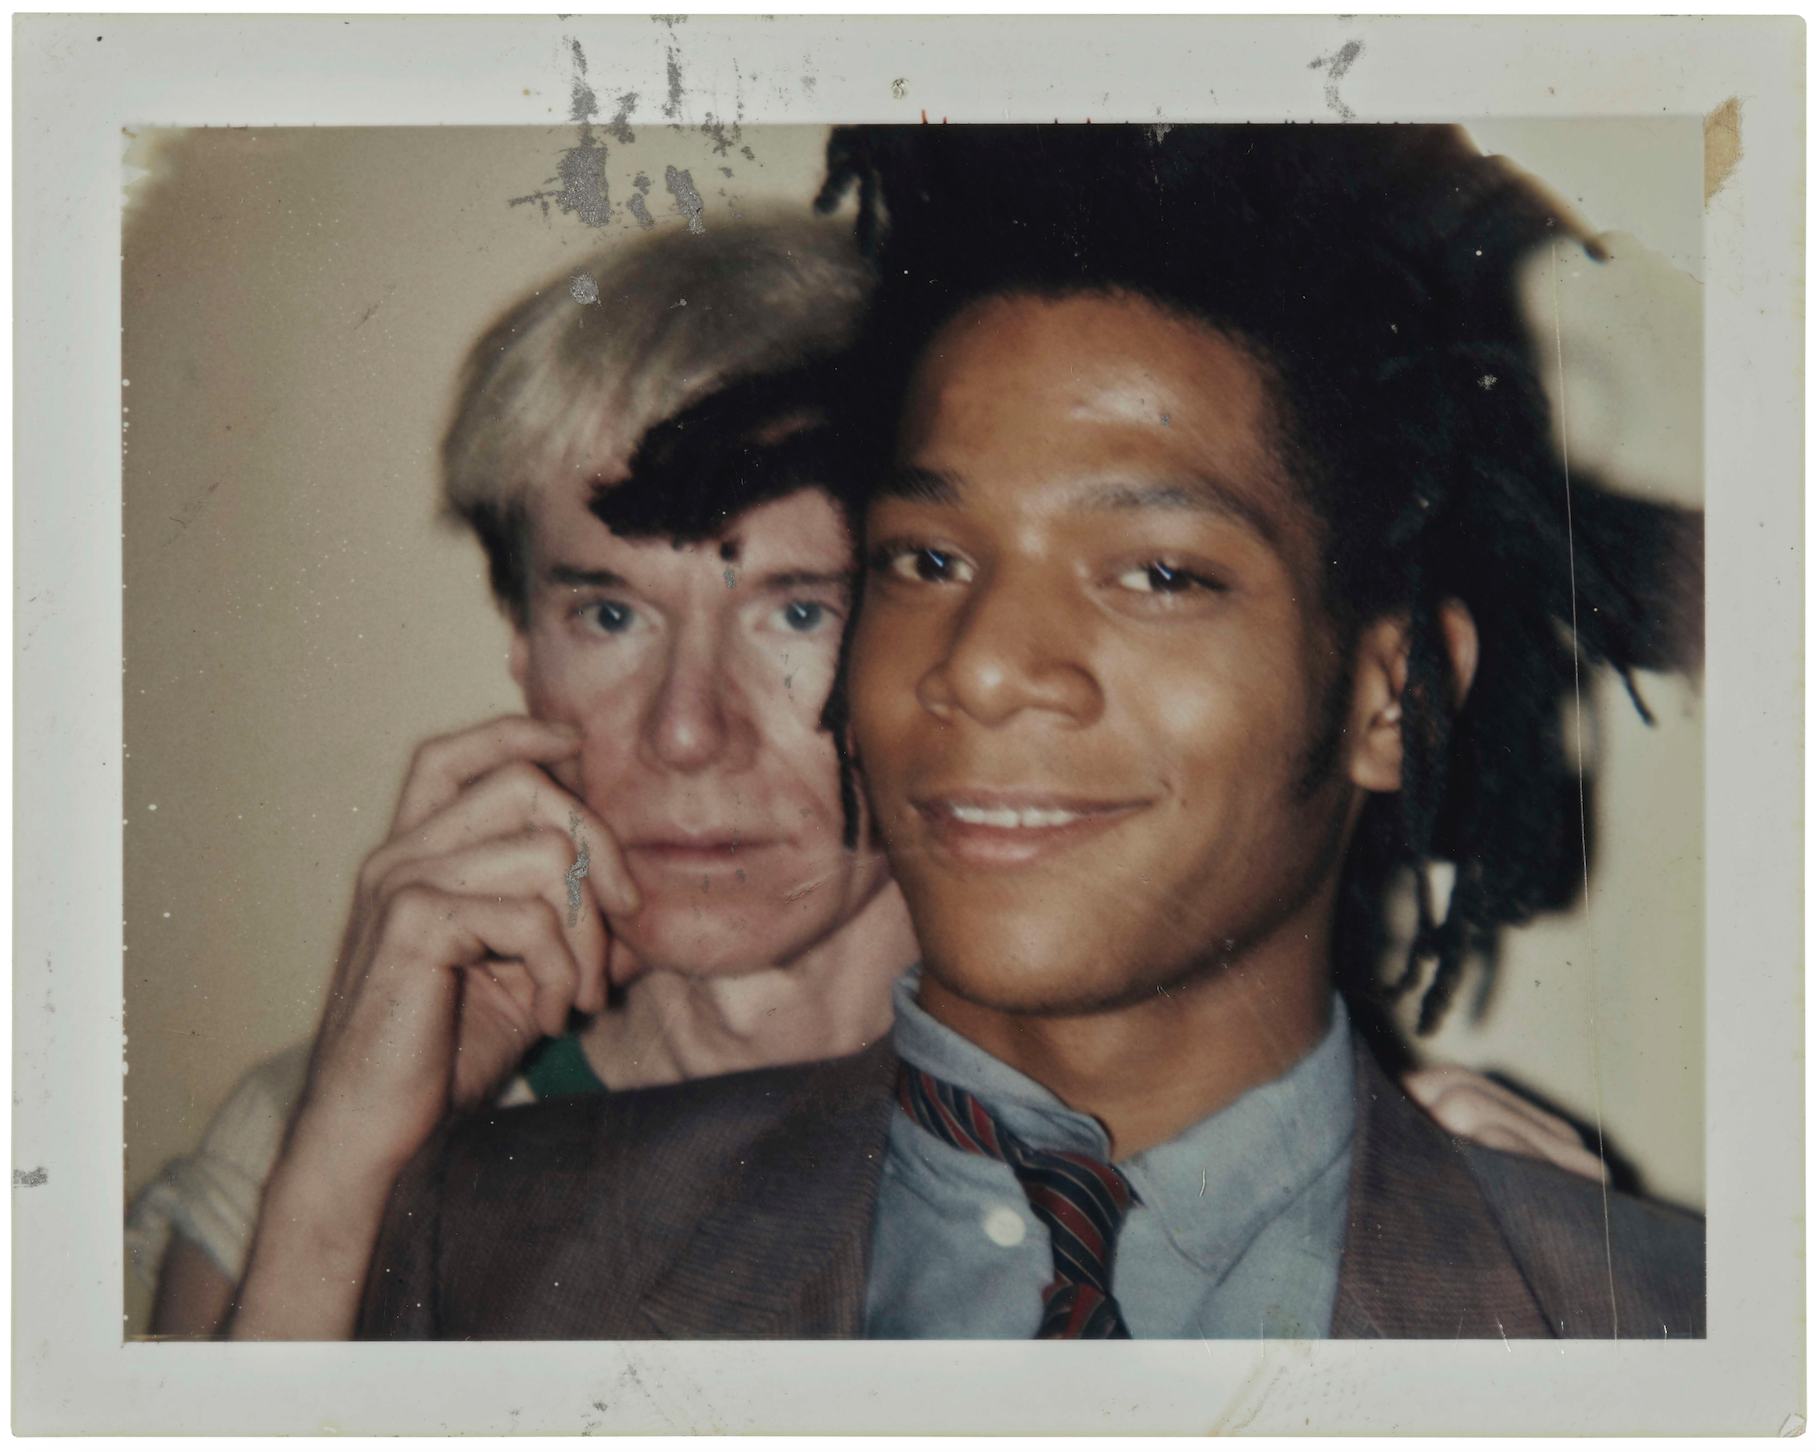 Basquiat x Warhol, Painting Four Hands at Fondation Louis Vuitton